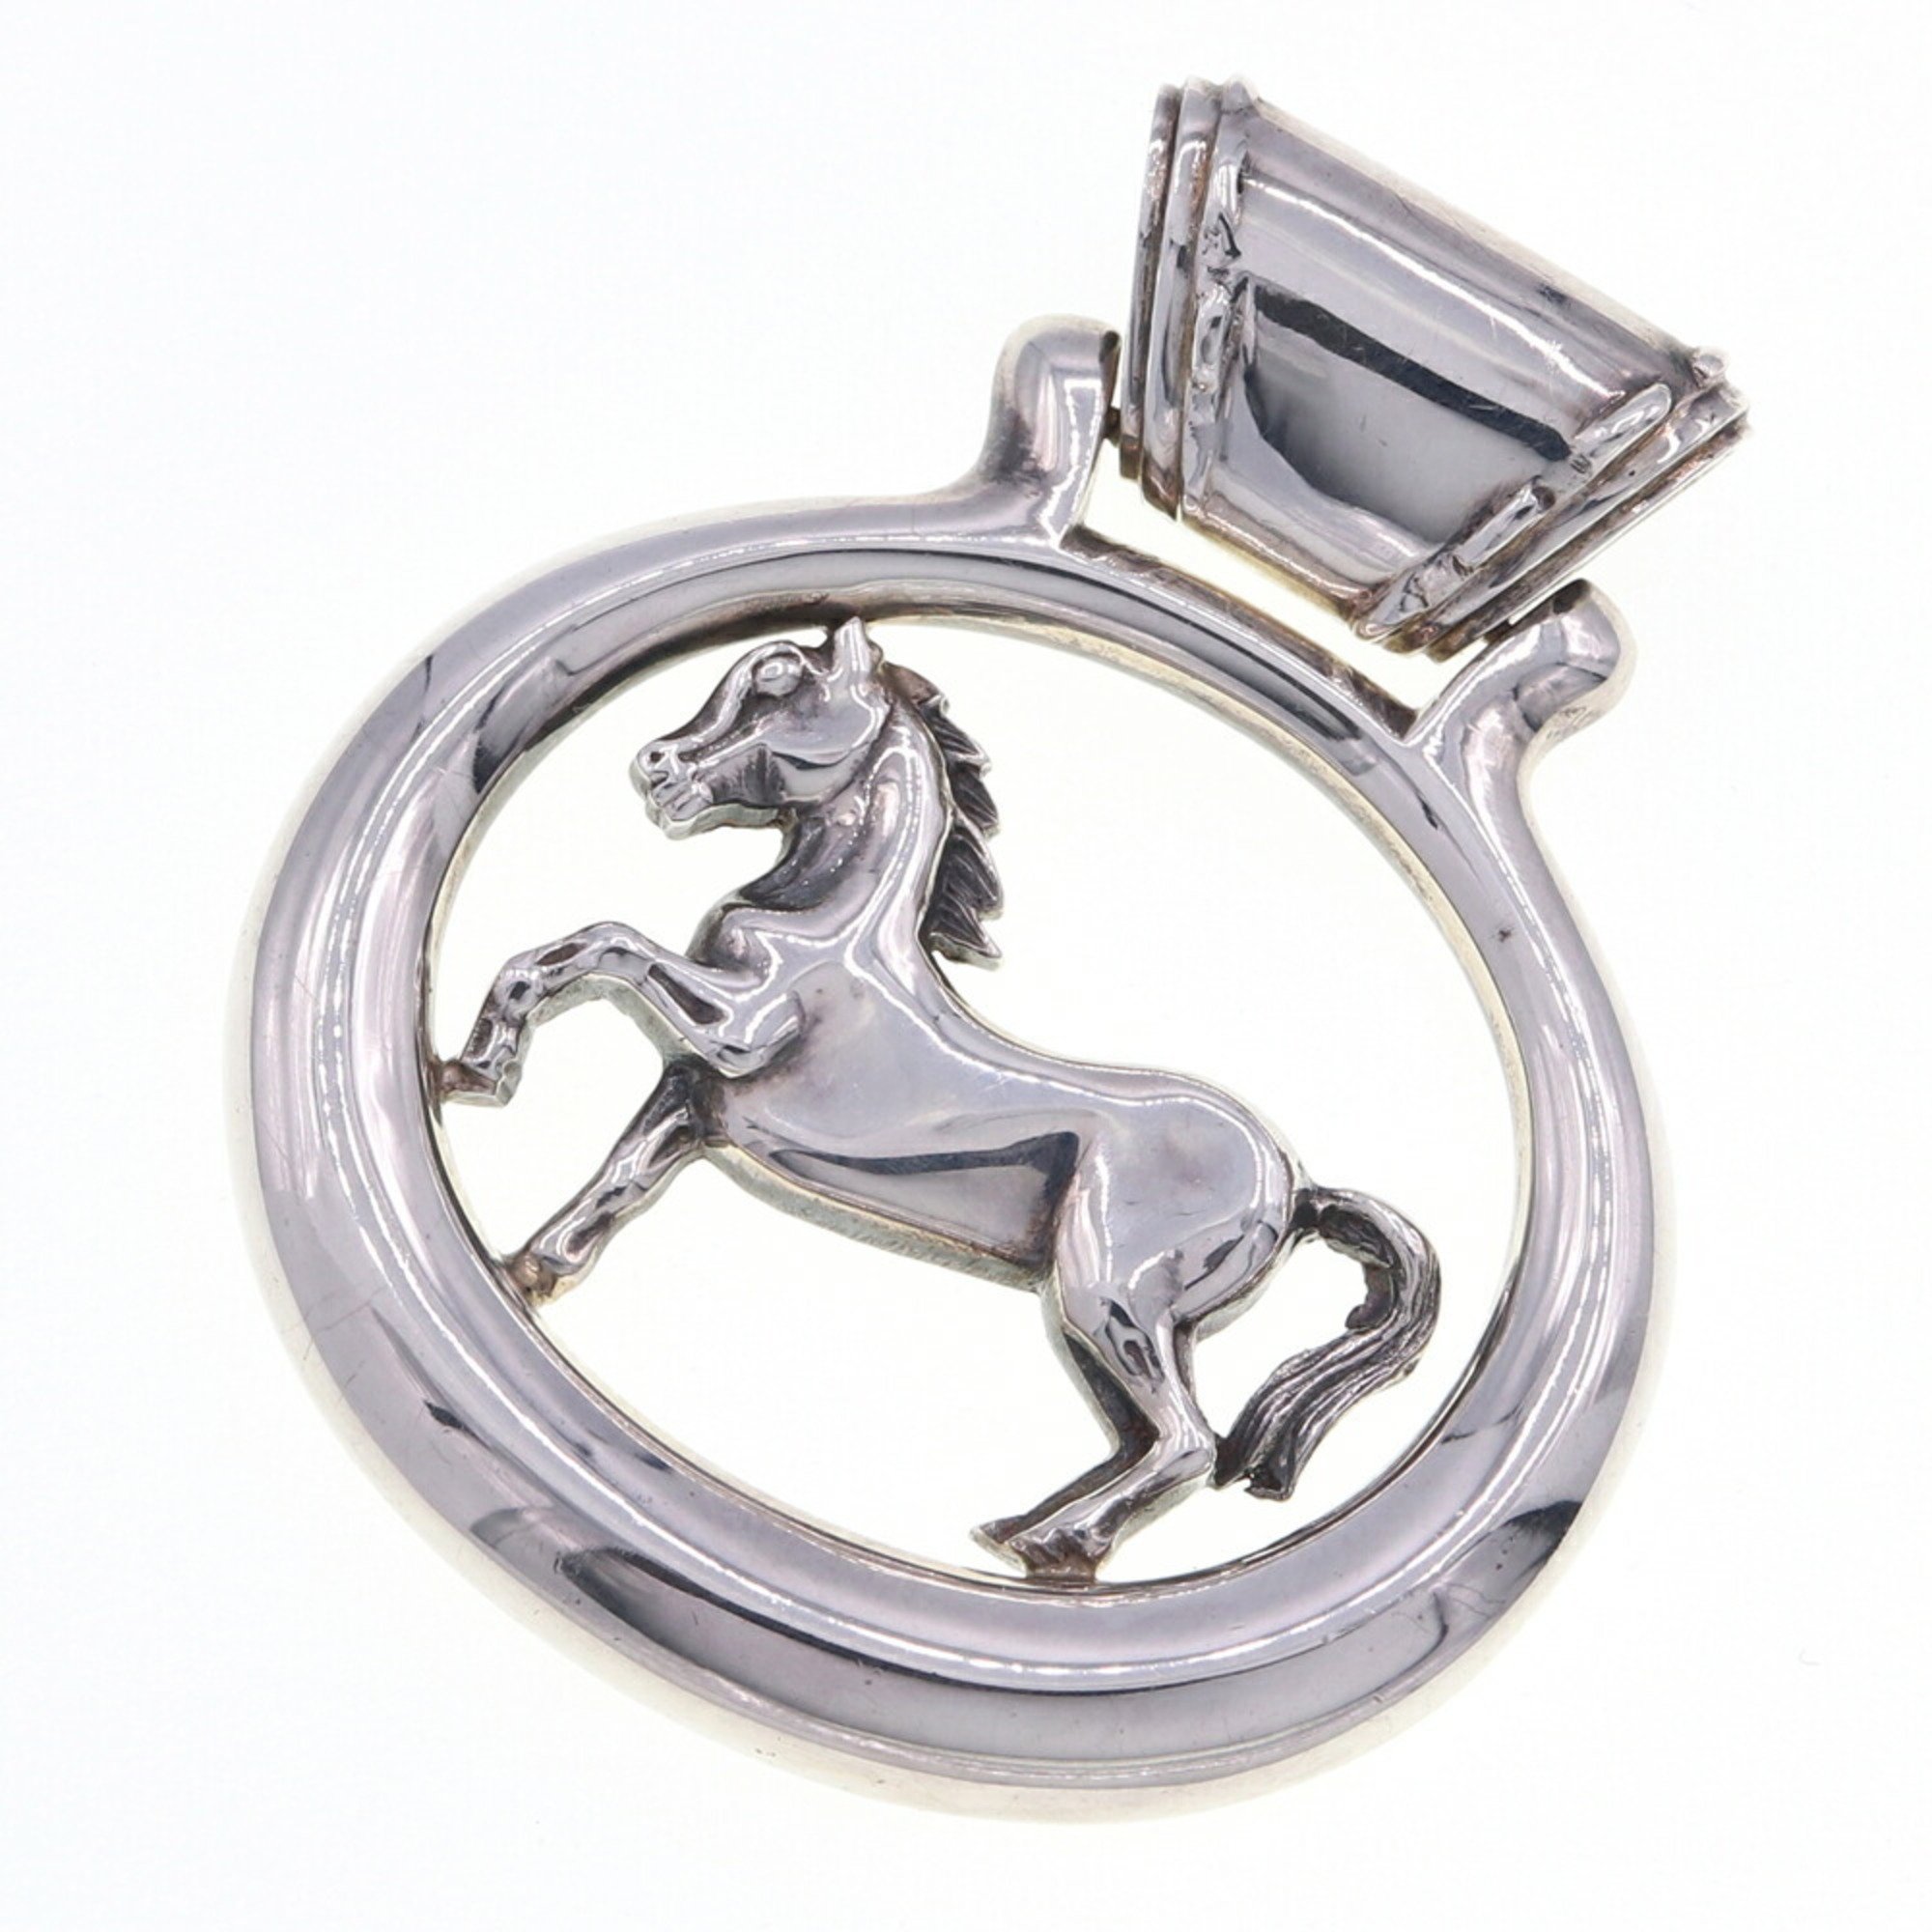 Hermes pendant top silver metal head necklace charm horse ladies HERMES